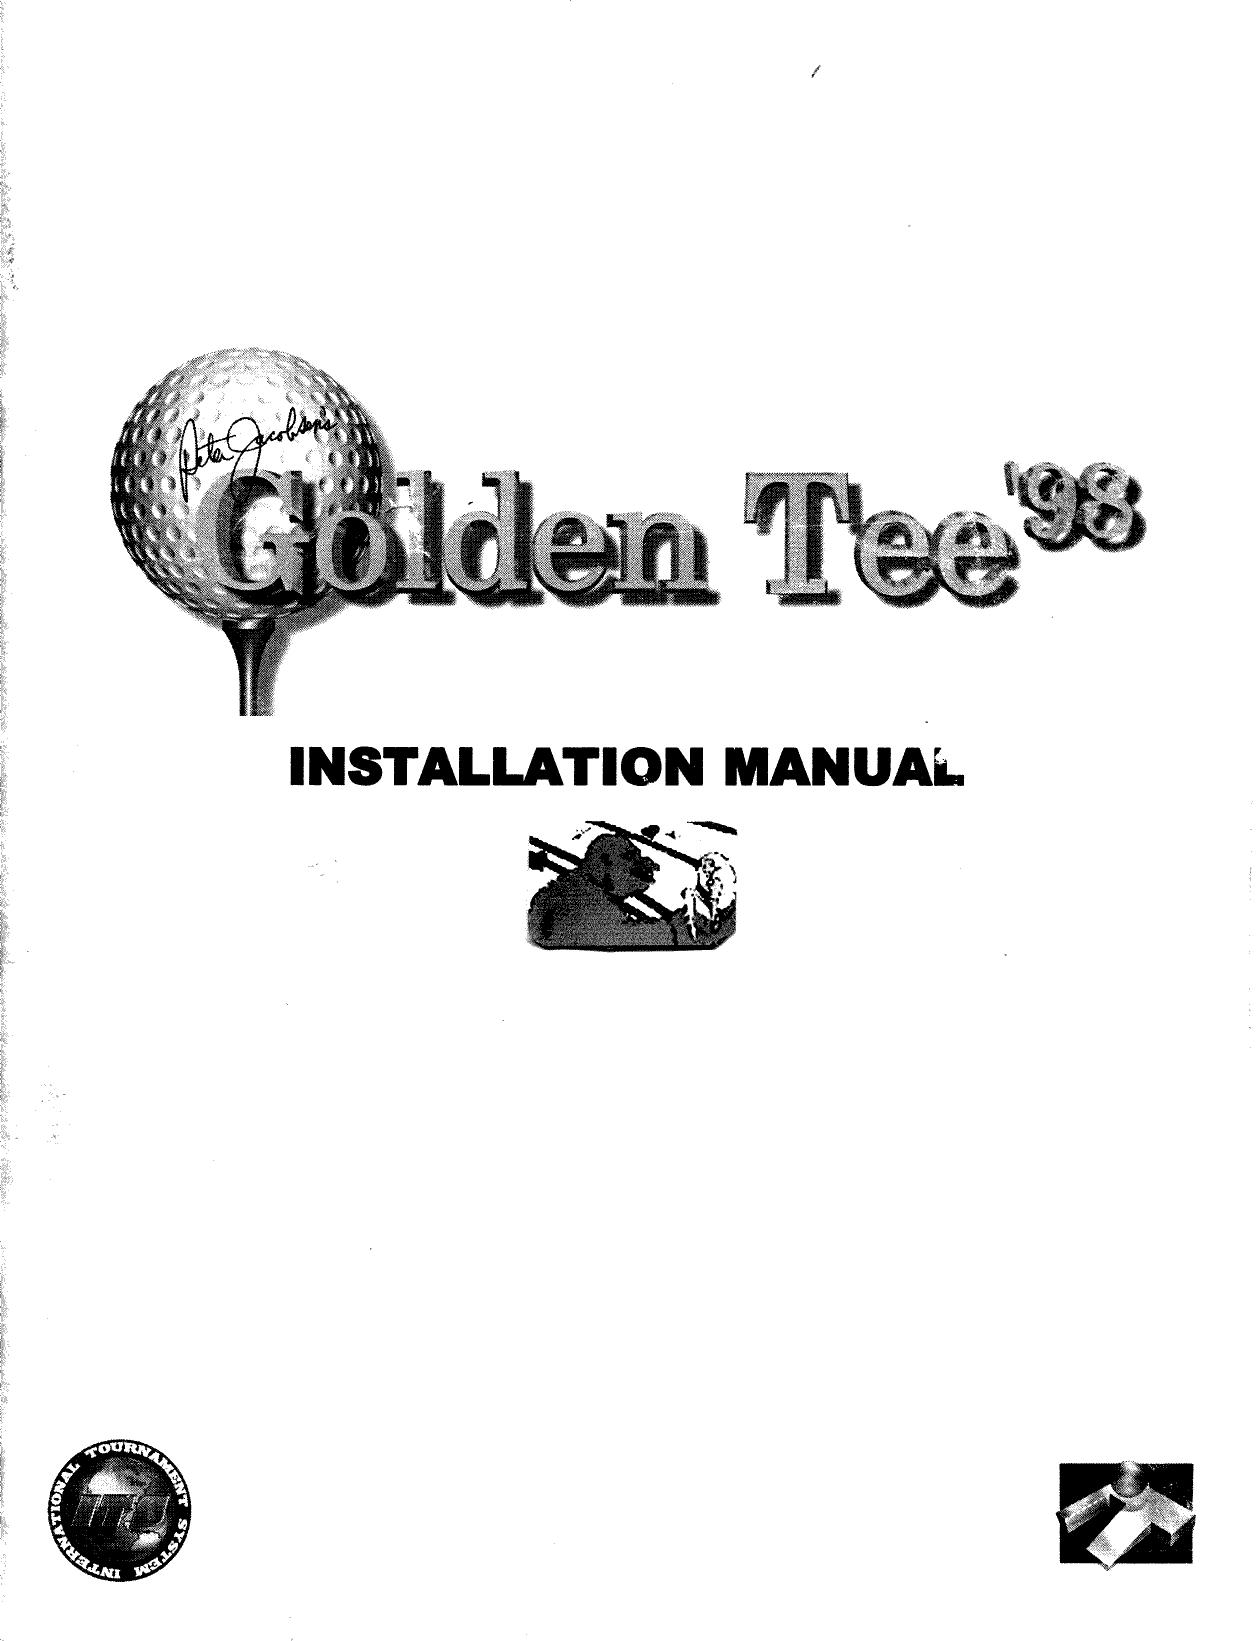 Golden Tee 98.man